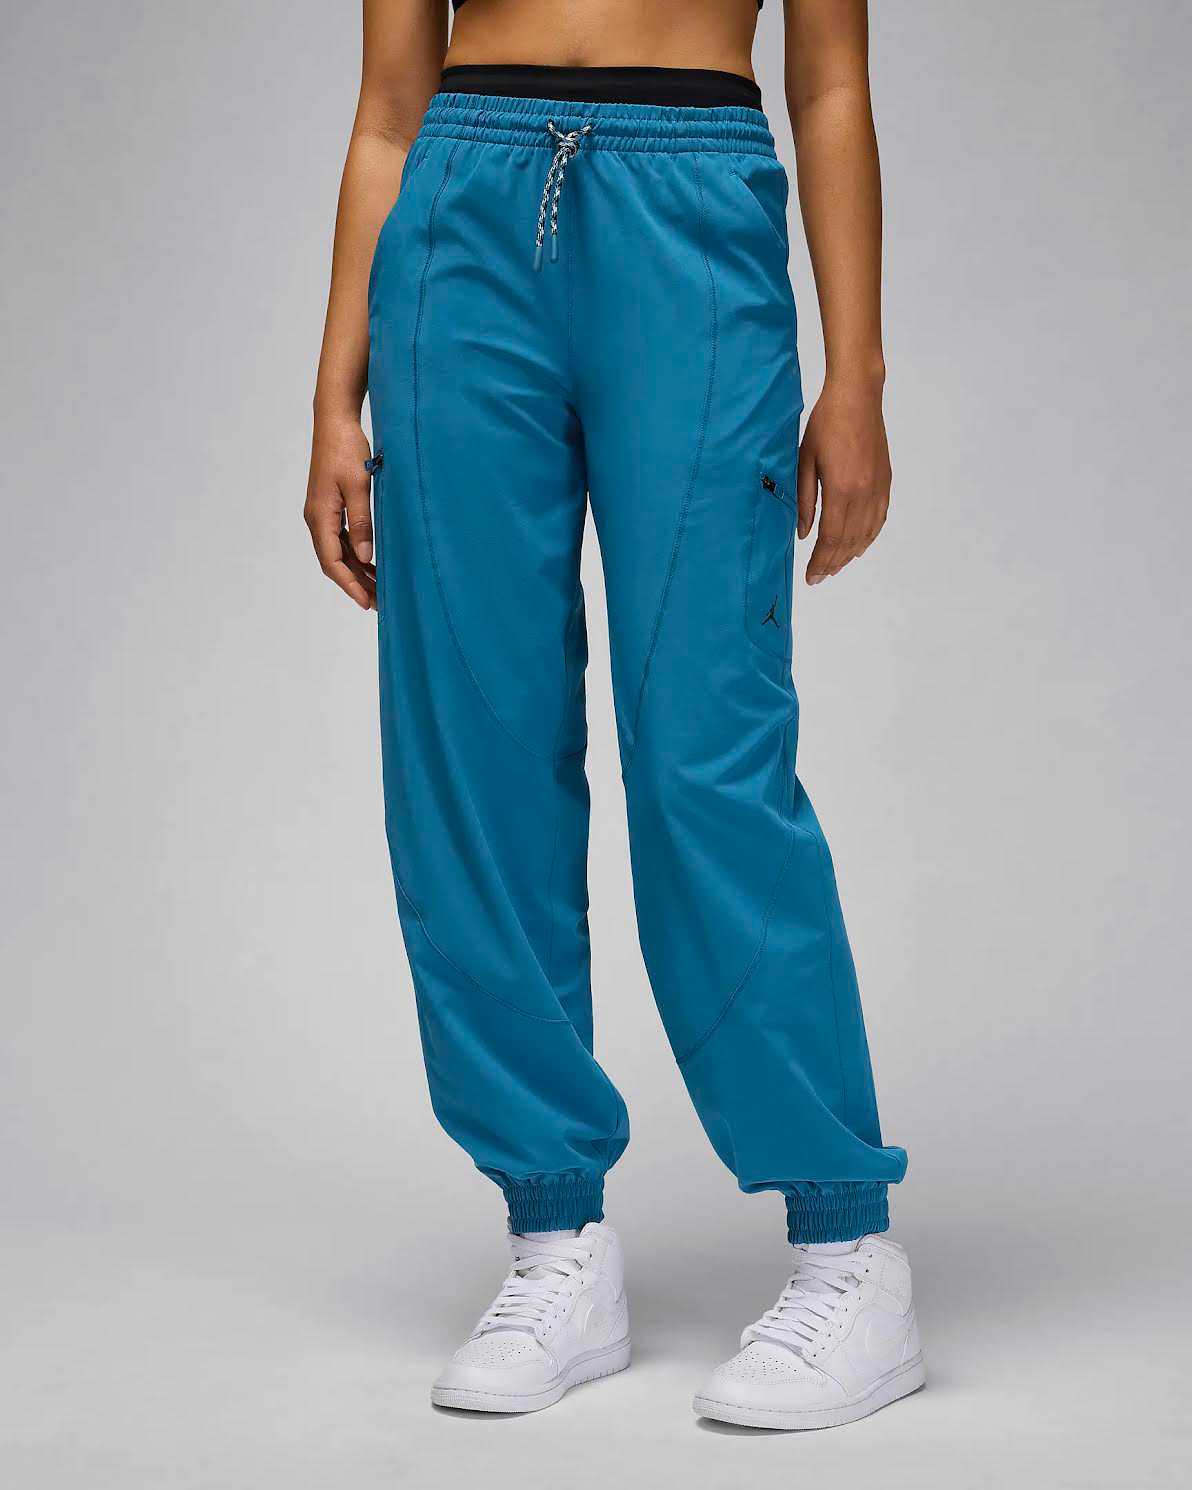 Jordan-Womens-Tunnel-Pants-Industrial-Blue